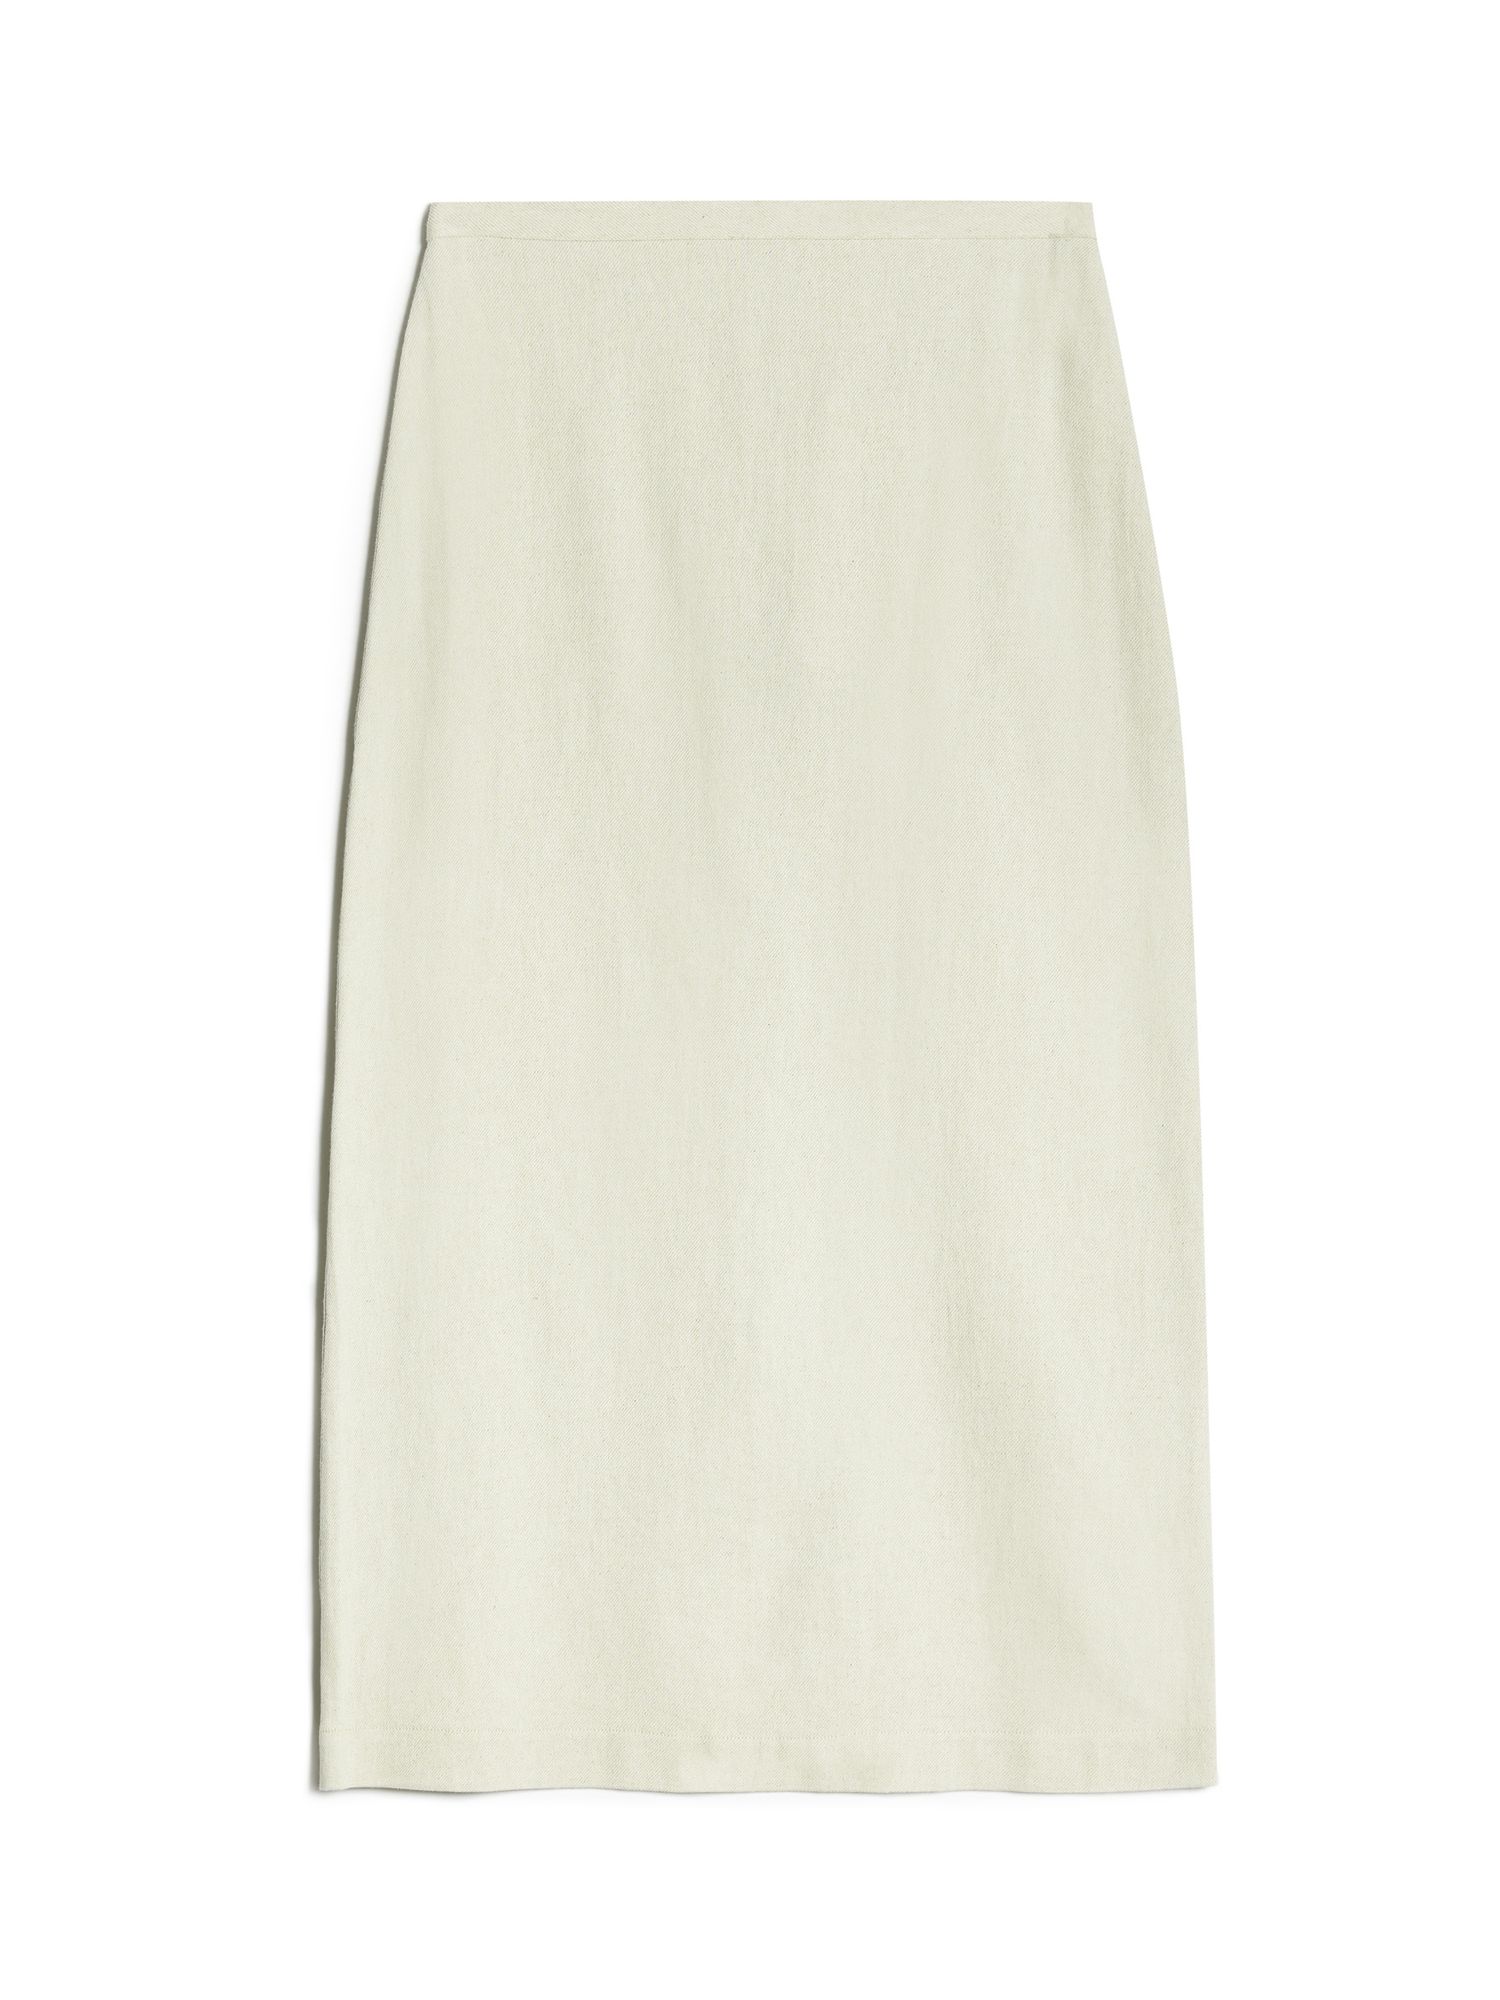 Buy Albaray Linen Twill Blend Midi Pencil Skirt, Sand Online at johnlewis.com